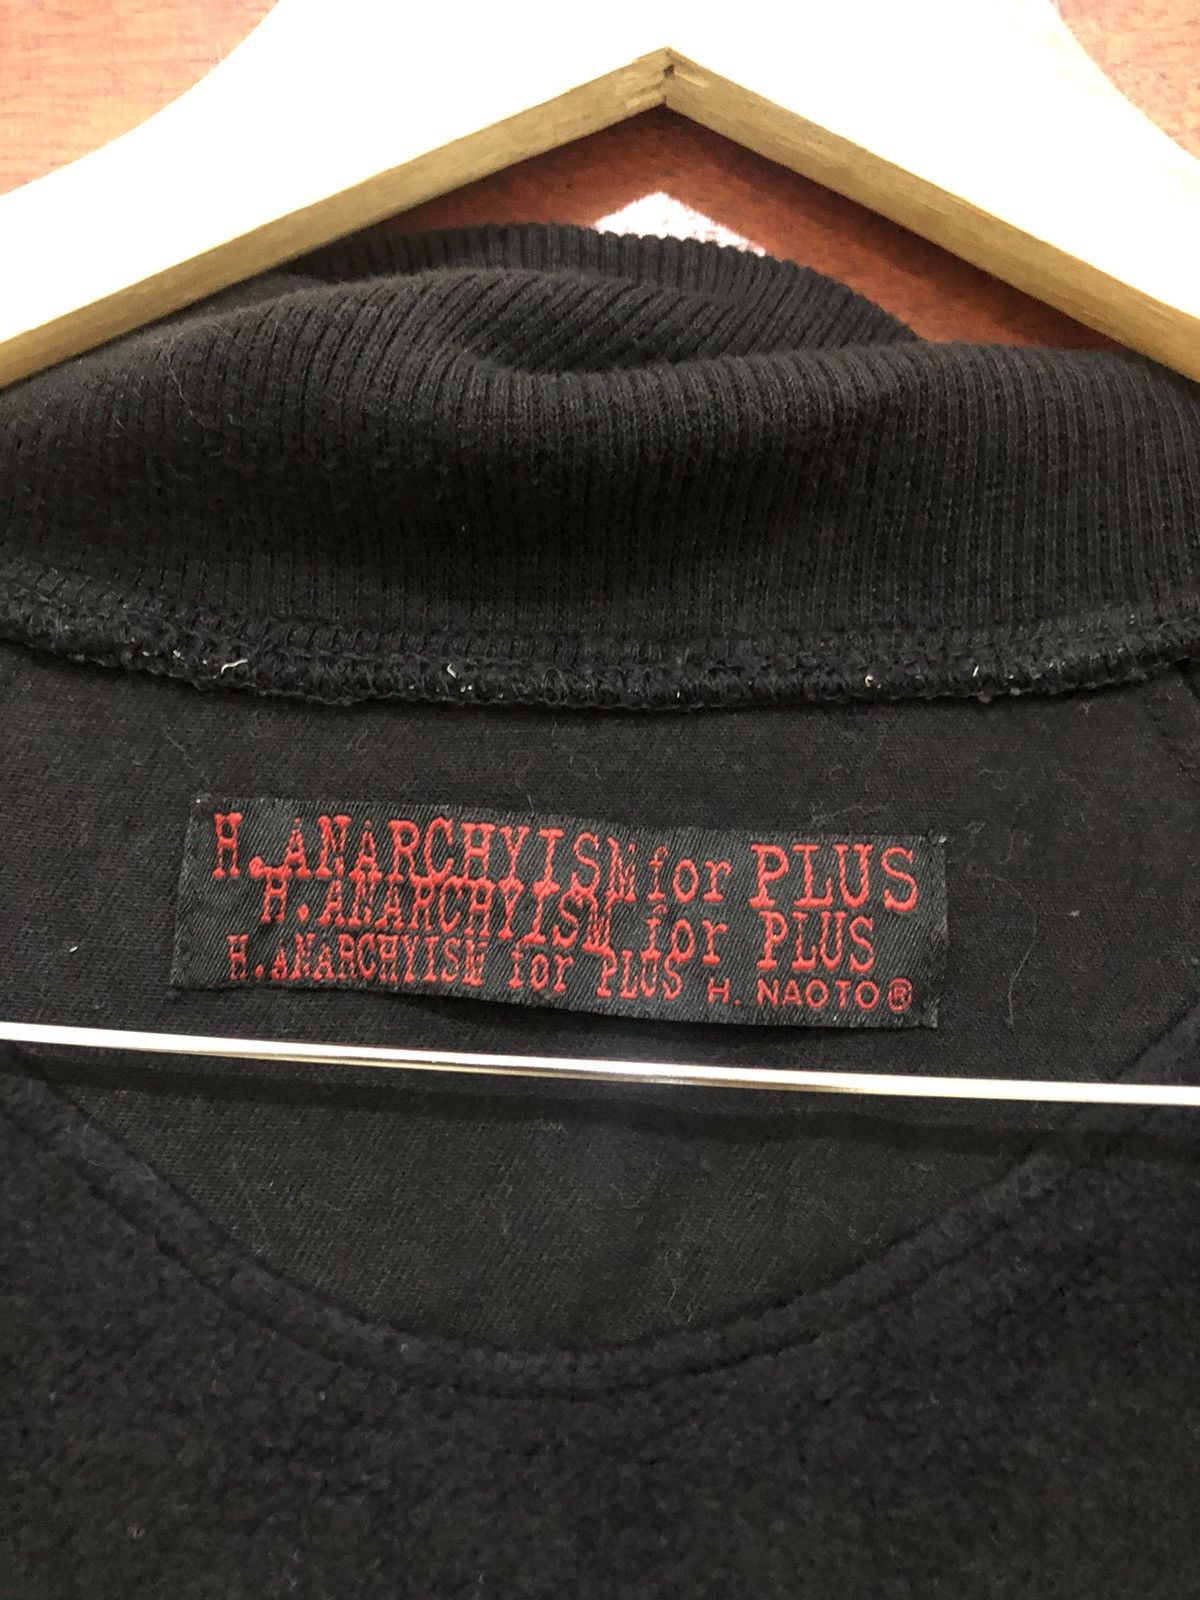 Japanese Brand - H.Anarchyism Distressed Punk Sweater - 11